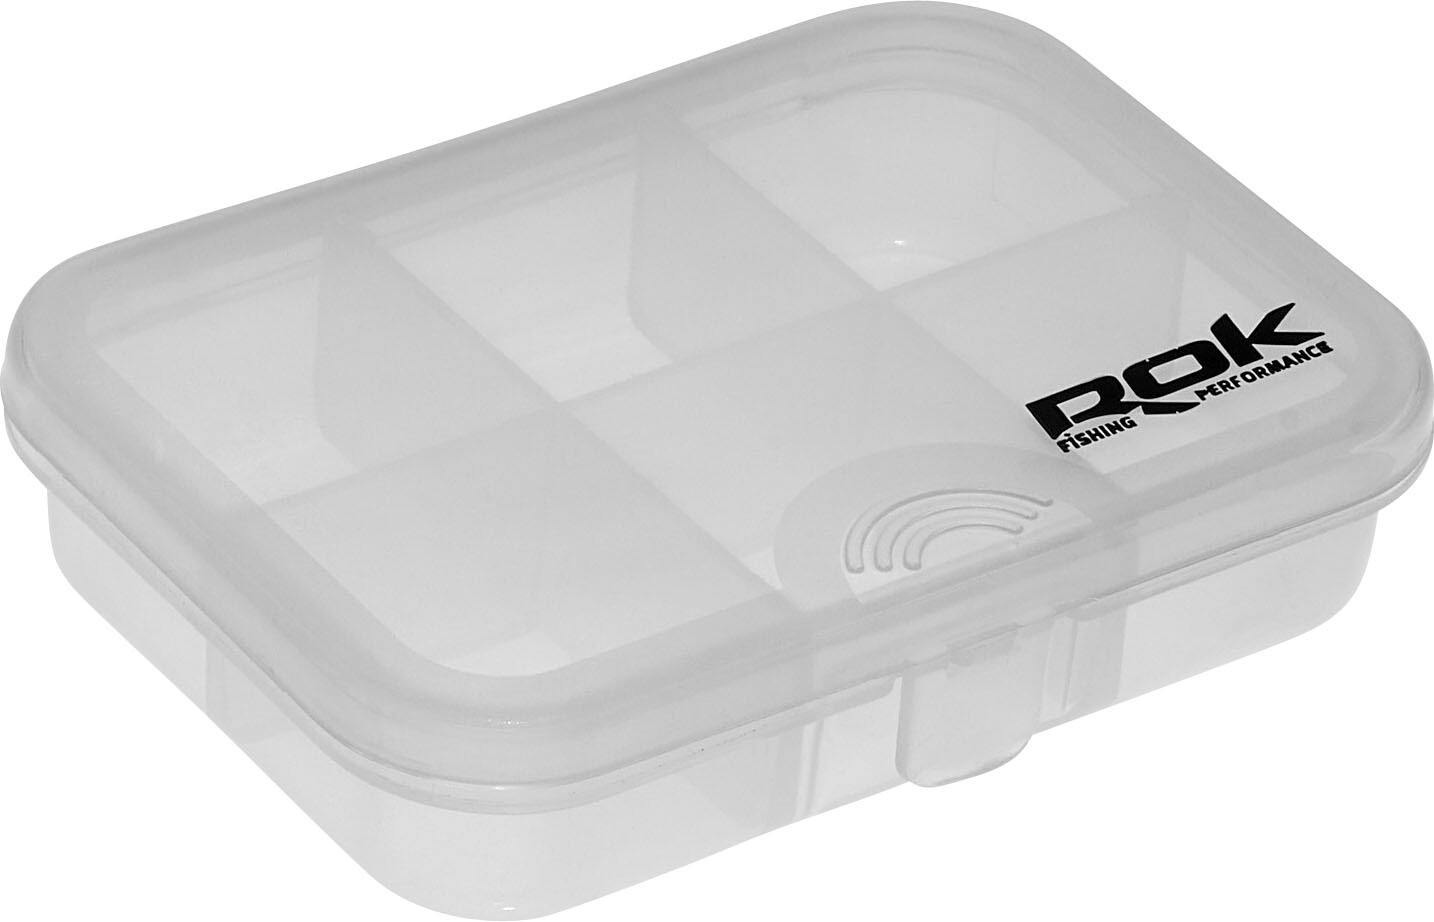 ROK STORAGE BOX XS306 - hat rekeszes mini tároló doboz - 9,1 cm x 6,6 cm x 2,2 cm